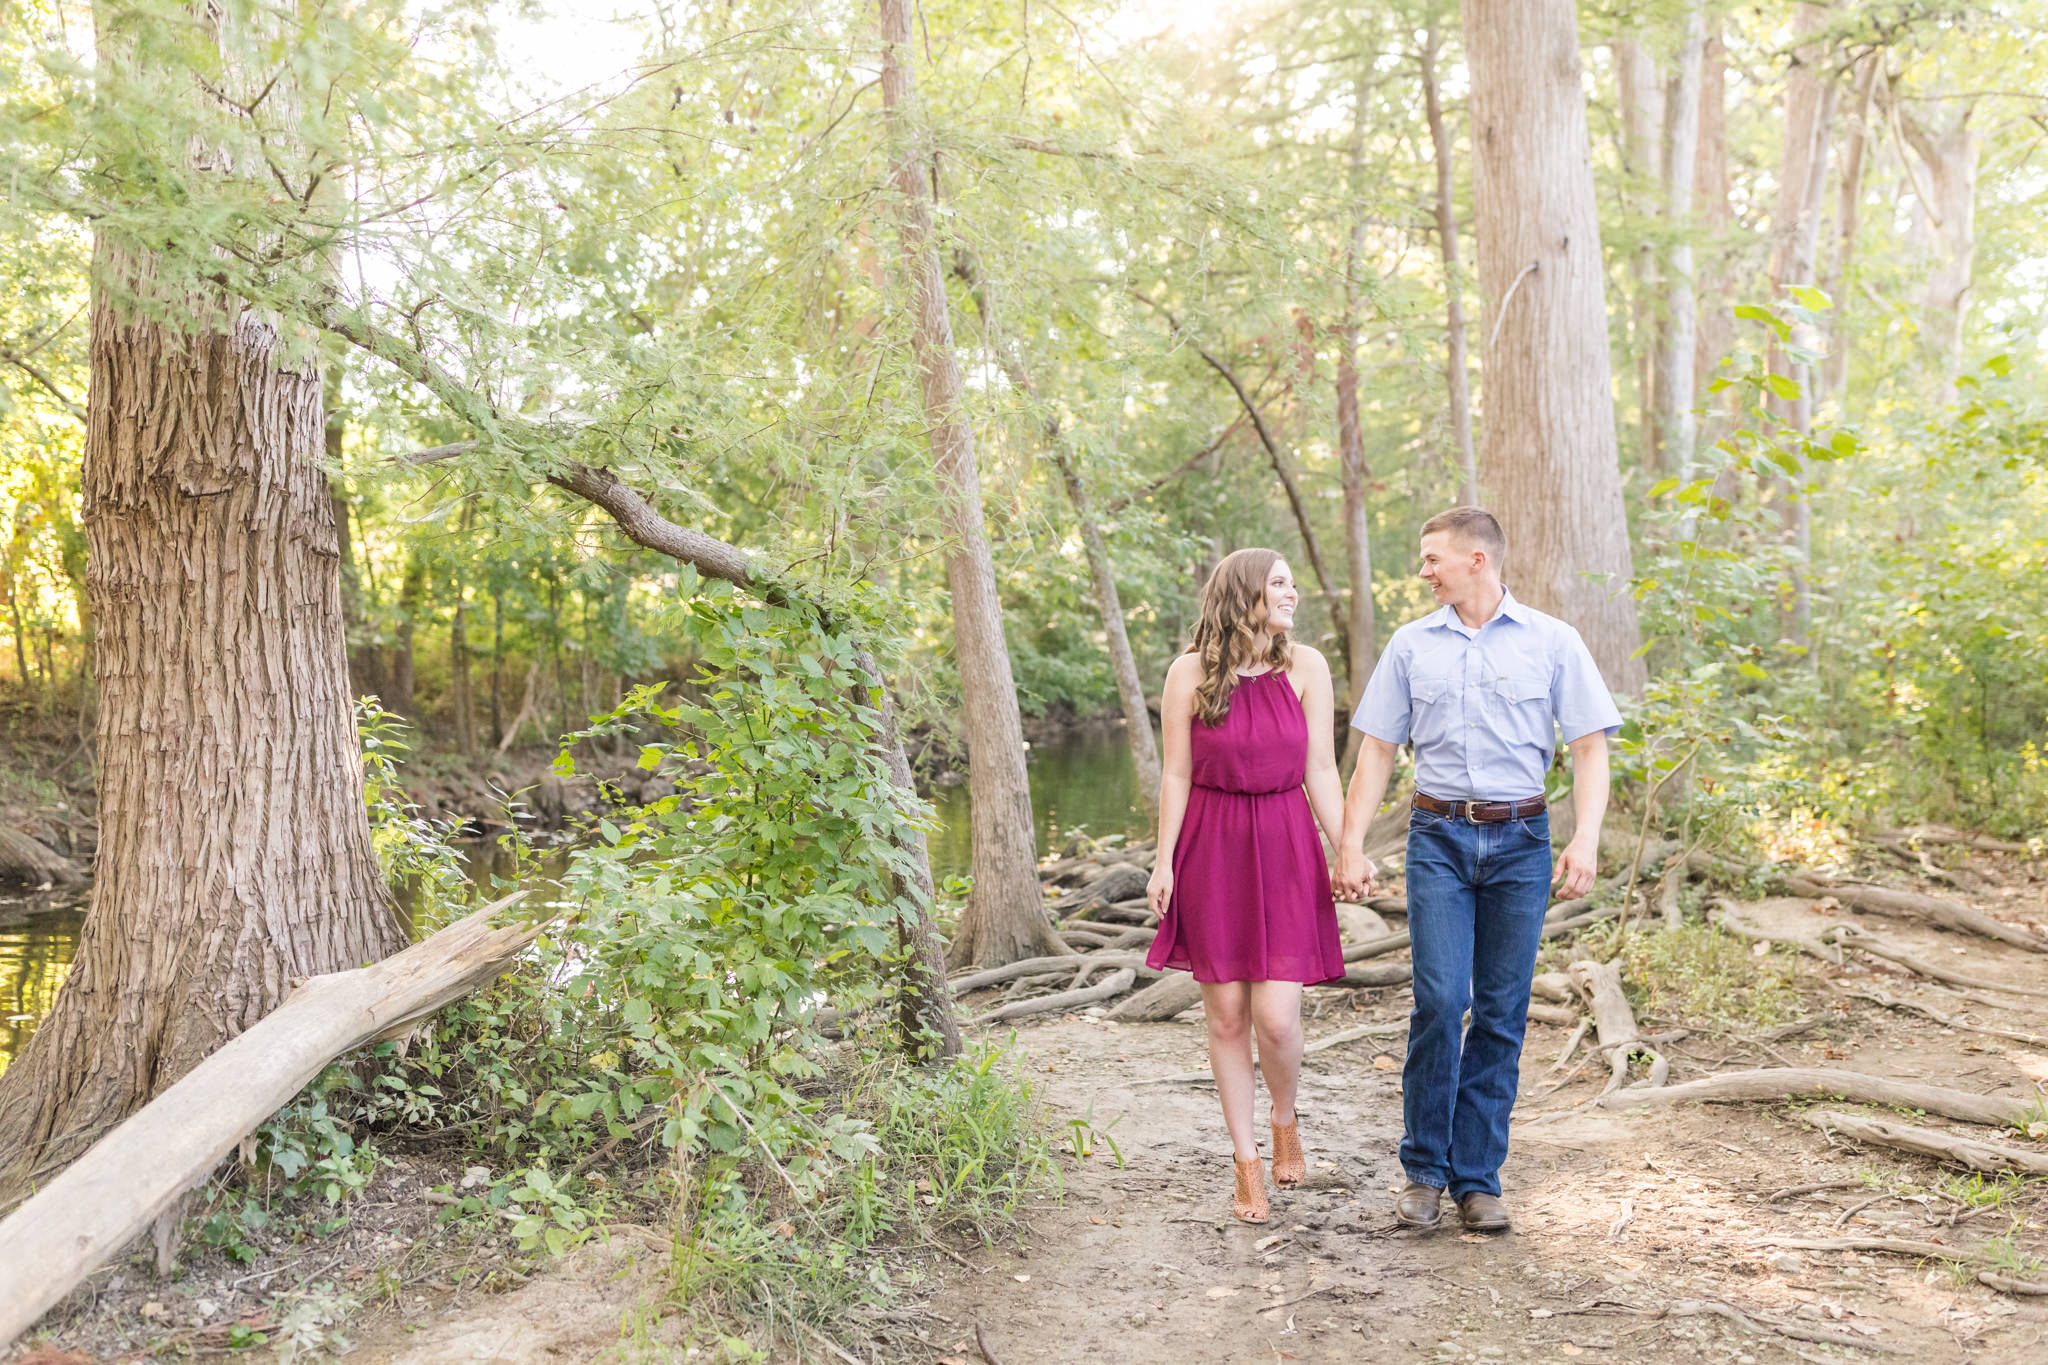 An Engagement Session at Cibolo Nature Center in Boerne, TX by Dawn Elizabeth Studios, San Antonio Wedding Photographer